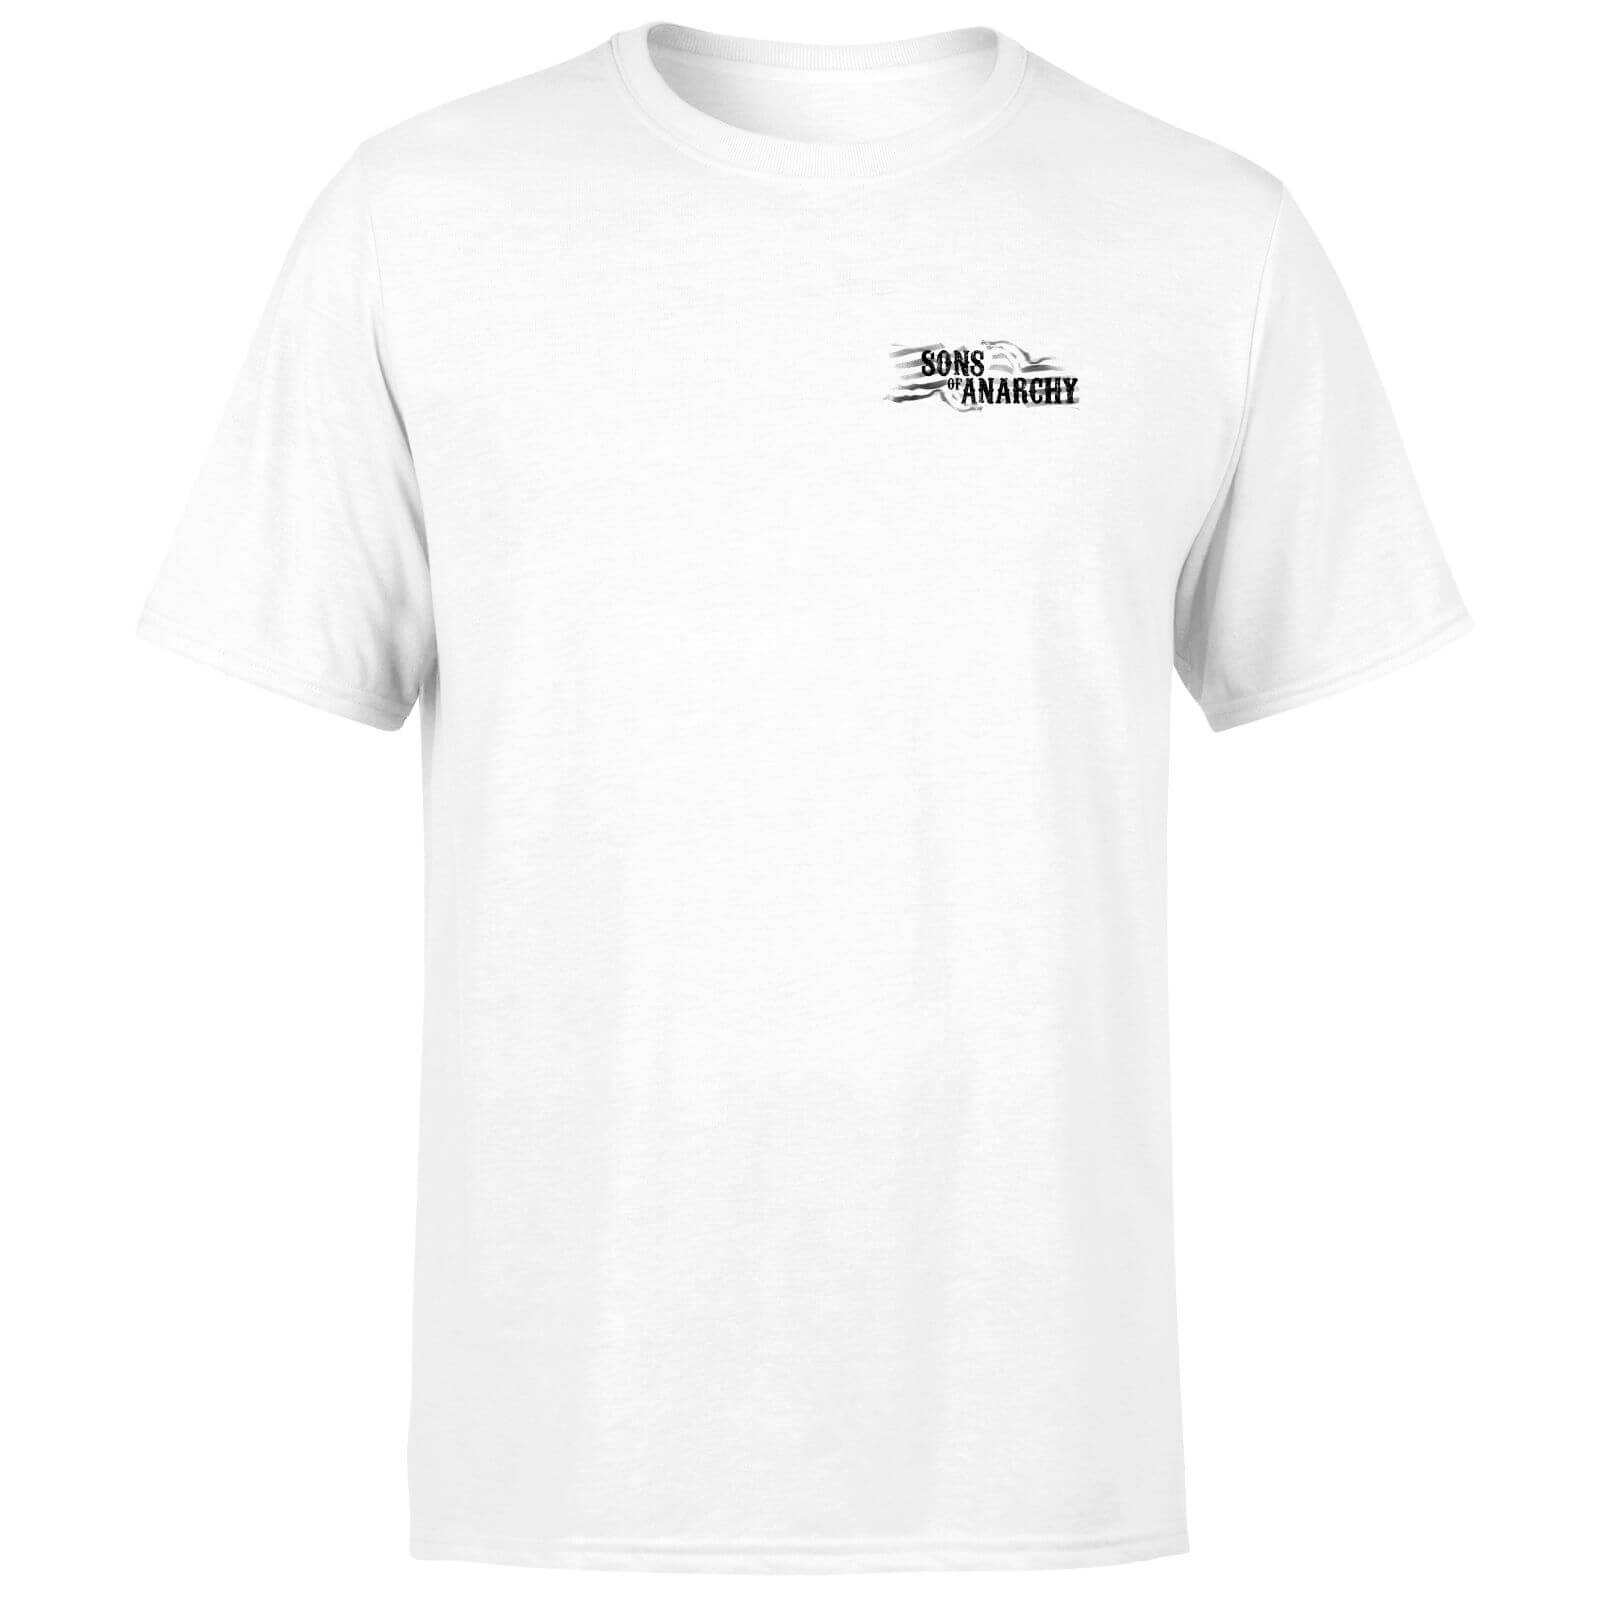 Sons of Anarchy Redwood Pocket Men's T-Shirt - White - XL - White